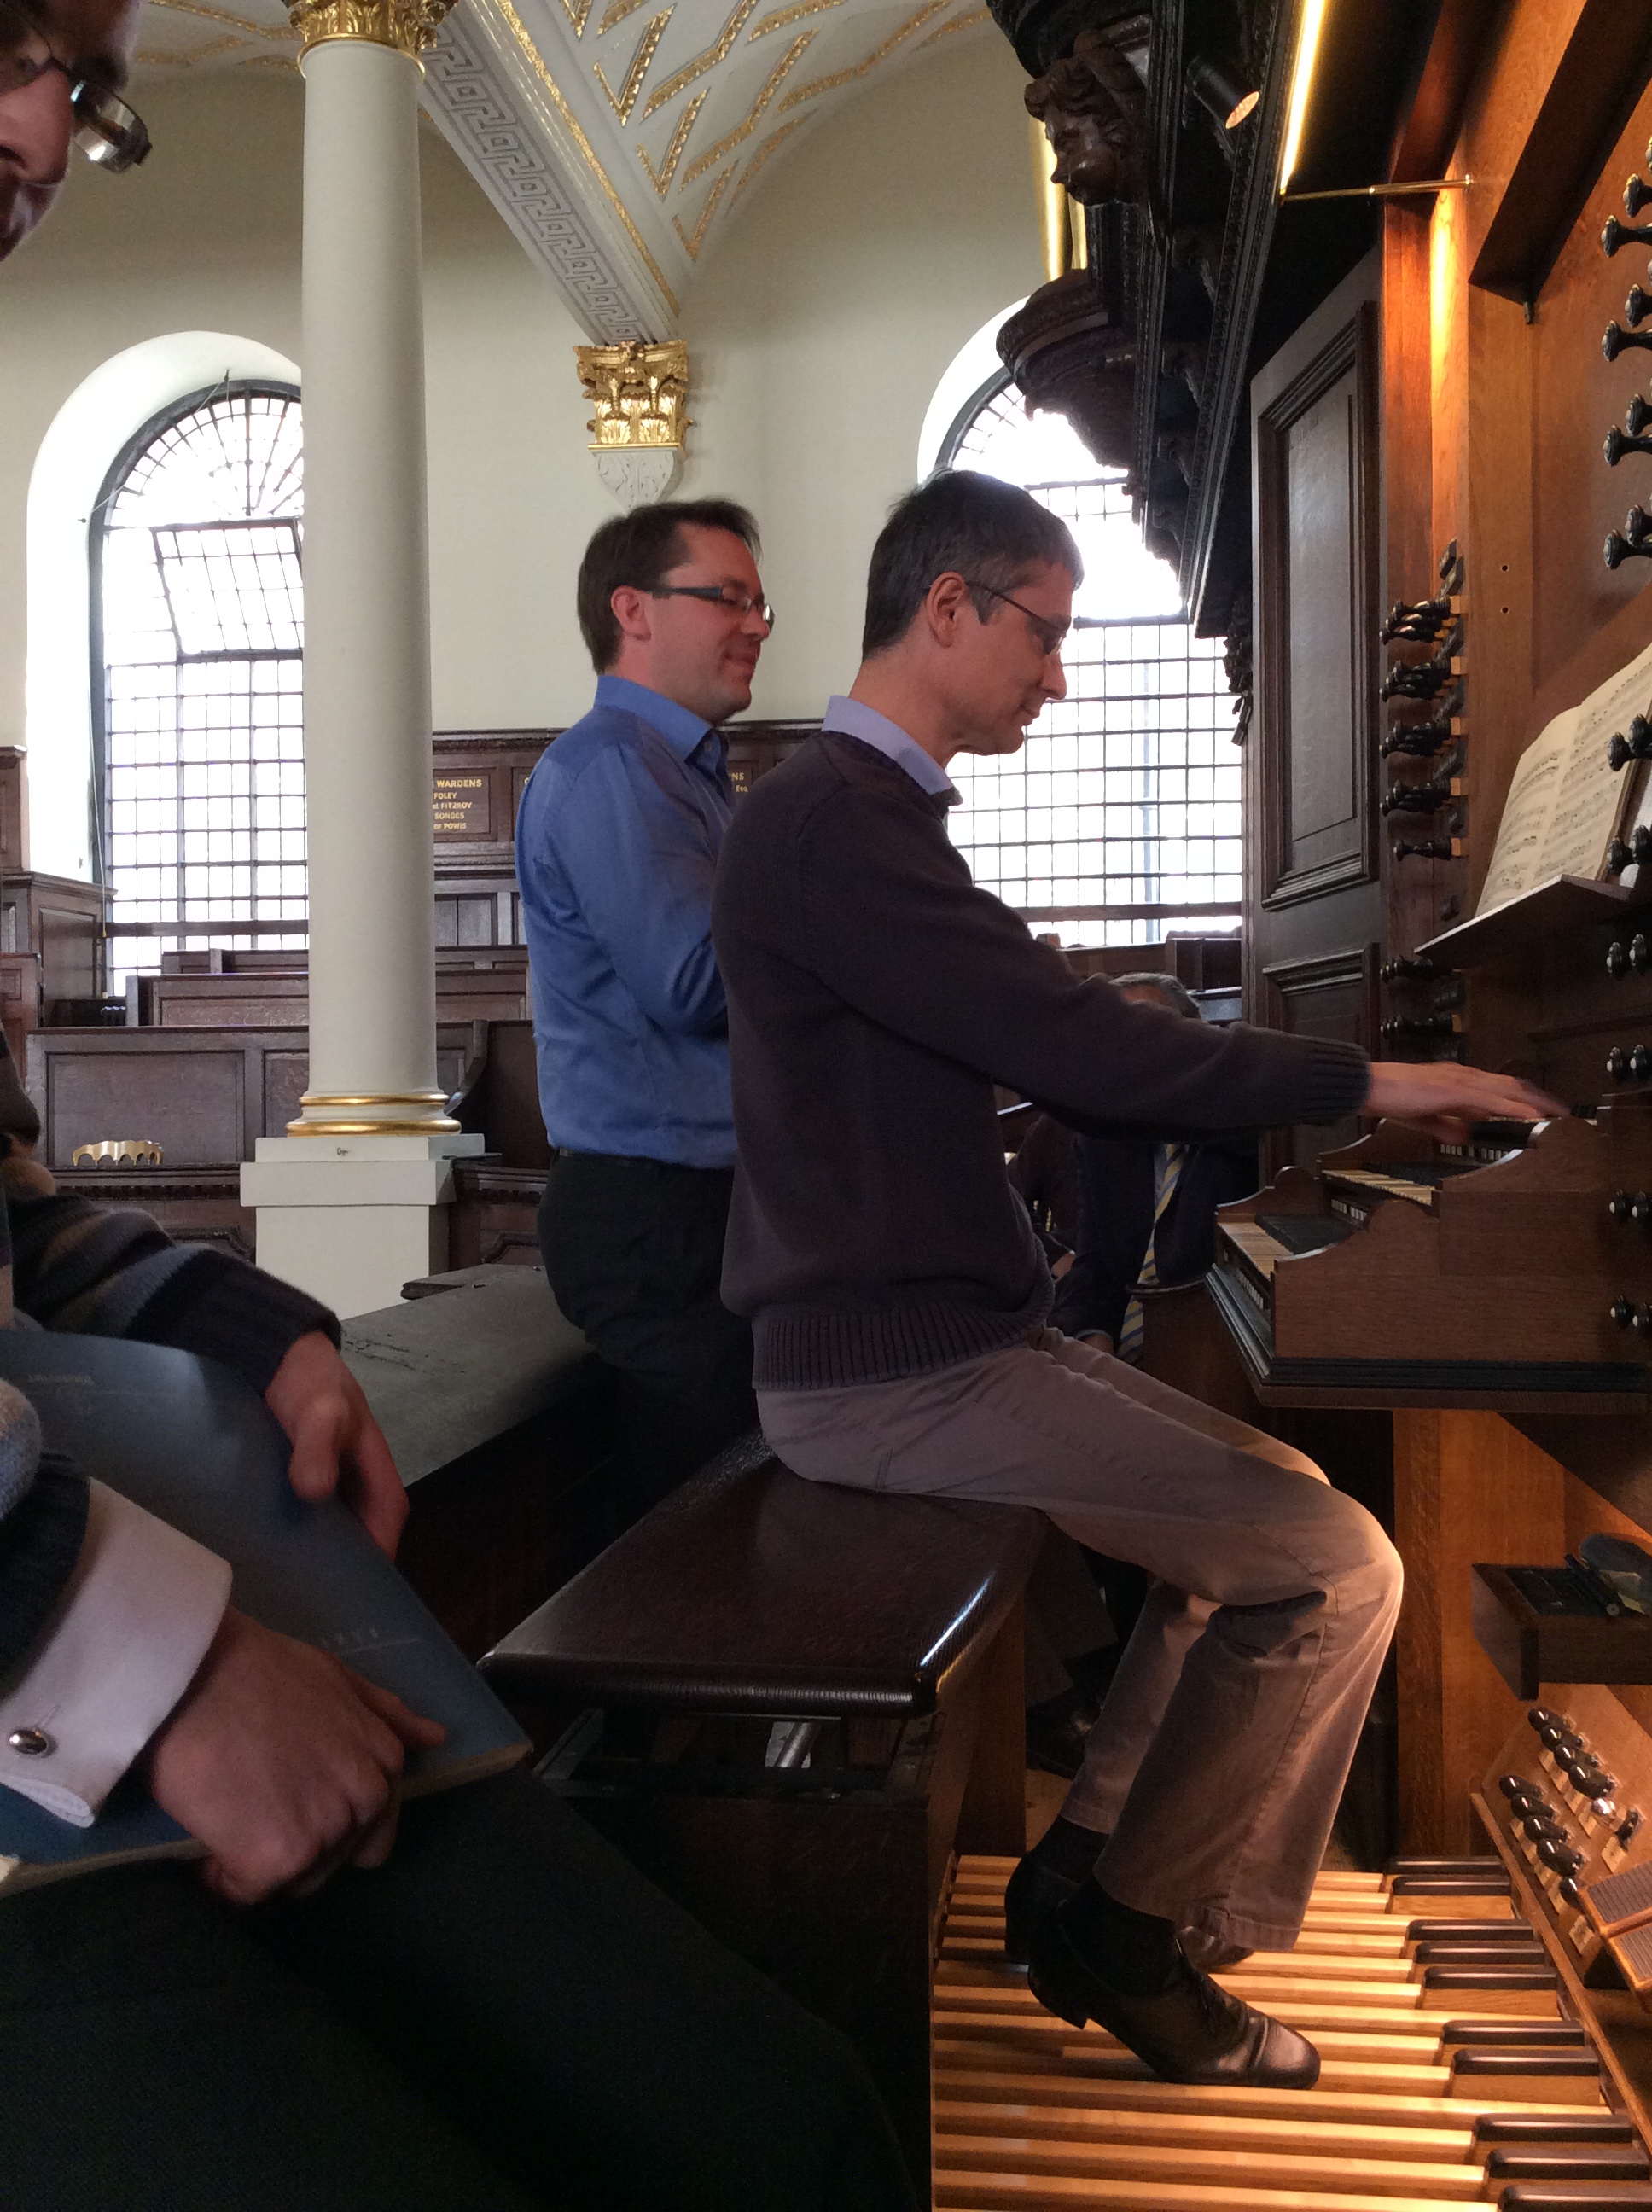 Image: Michael Hennin at the organ with Robin Walker